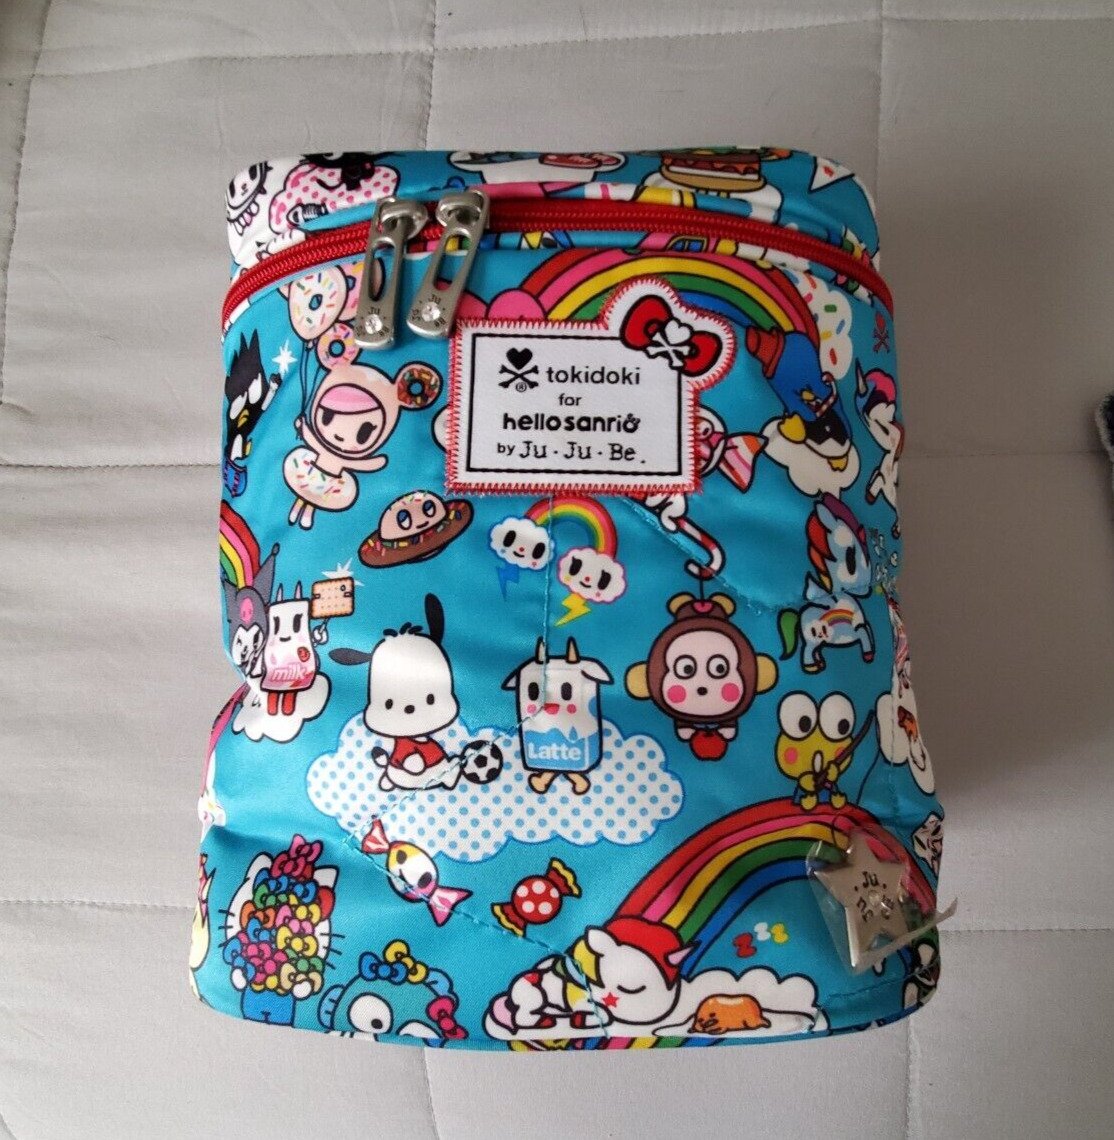 Tokidoki Sanrio Jujube Rainbow Dreams Fuel Cell Lunch Bag Hello Kitty